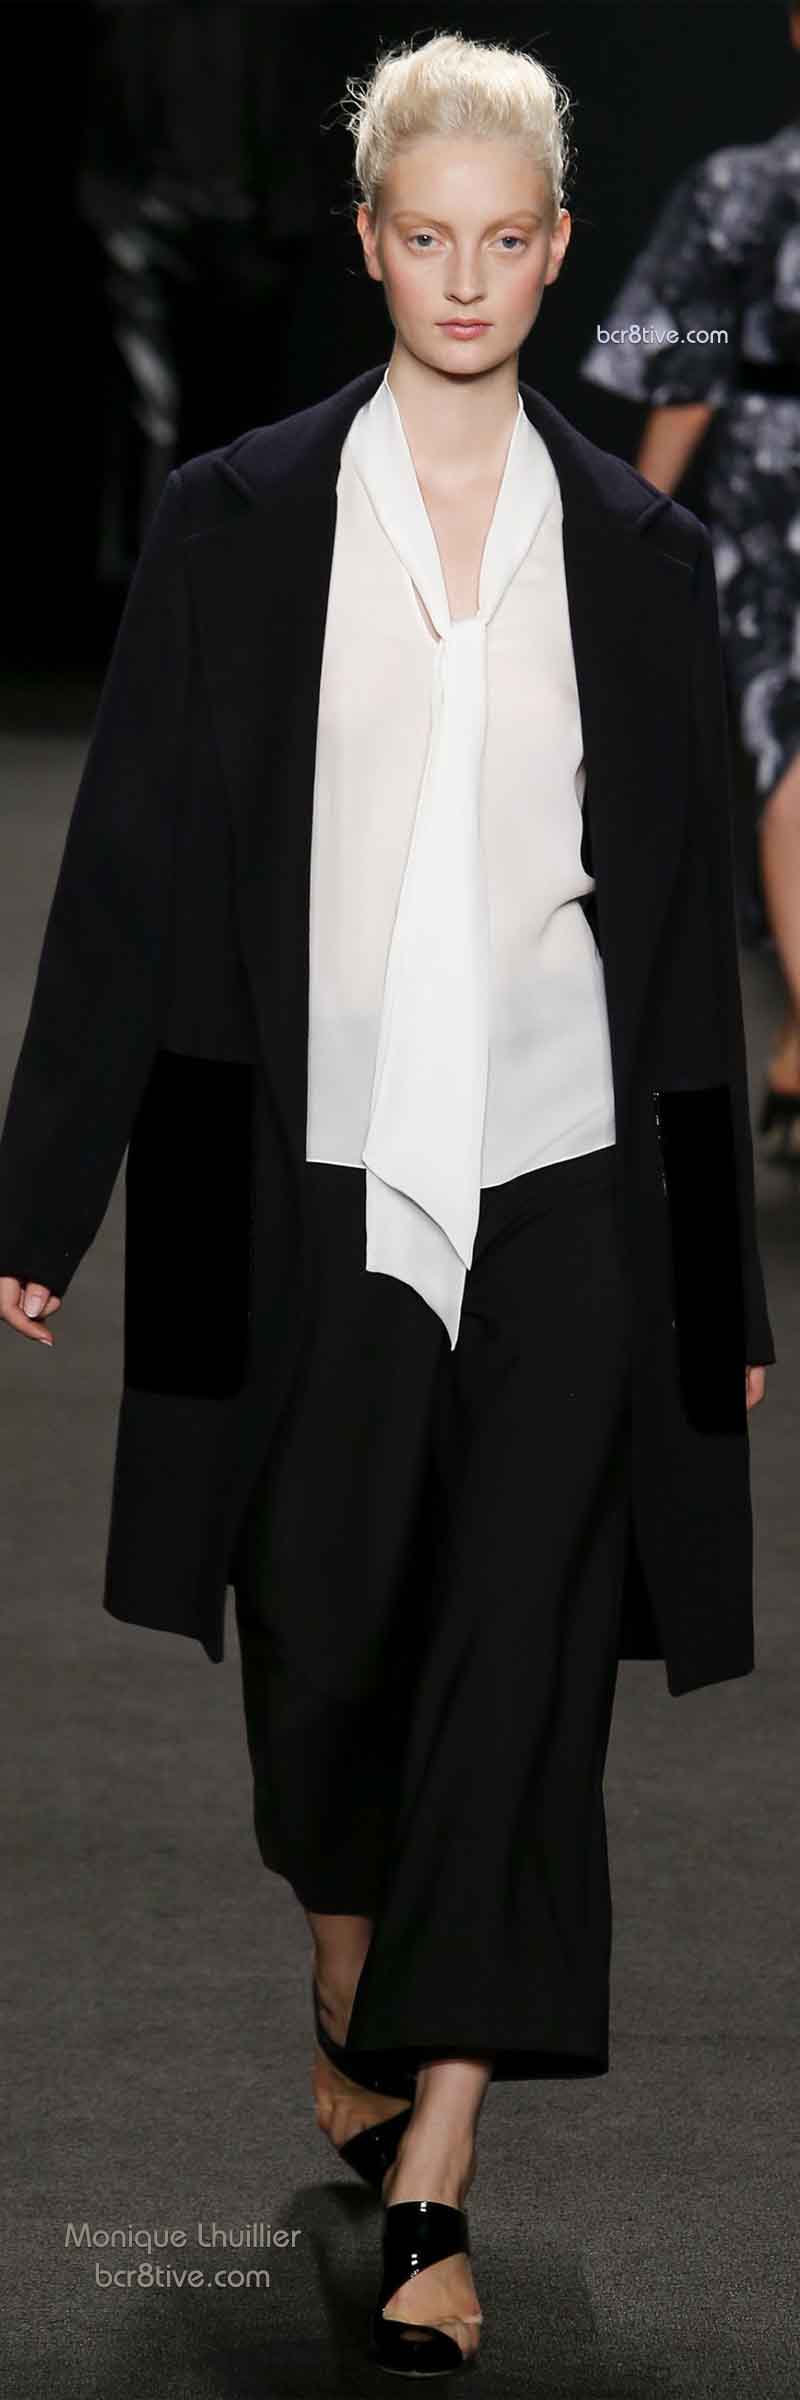 Fall 2014 Menswear Inspired Fashion - Monique Lhuillier